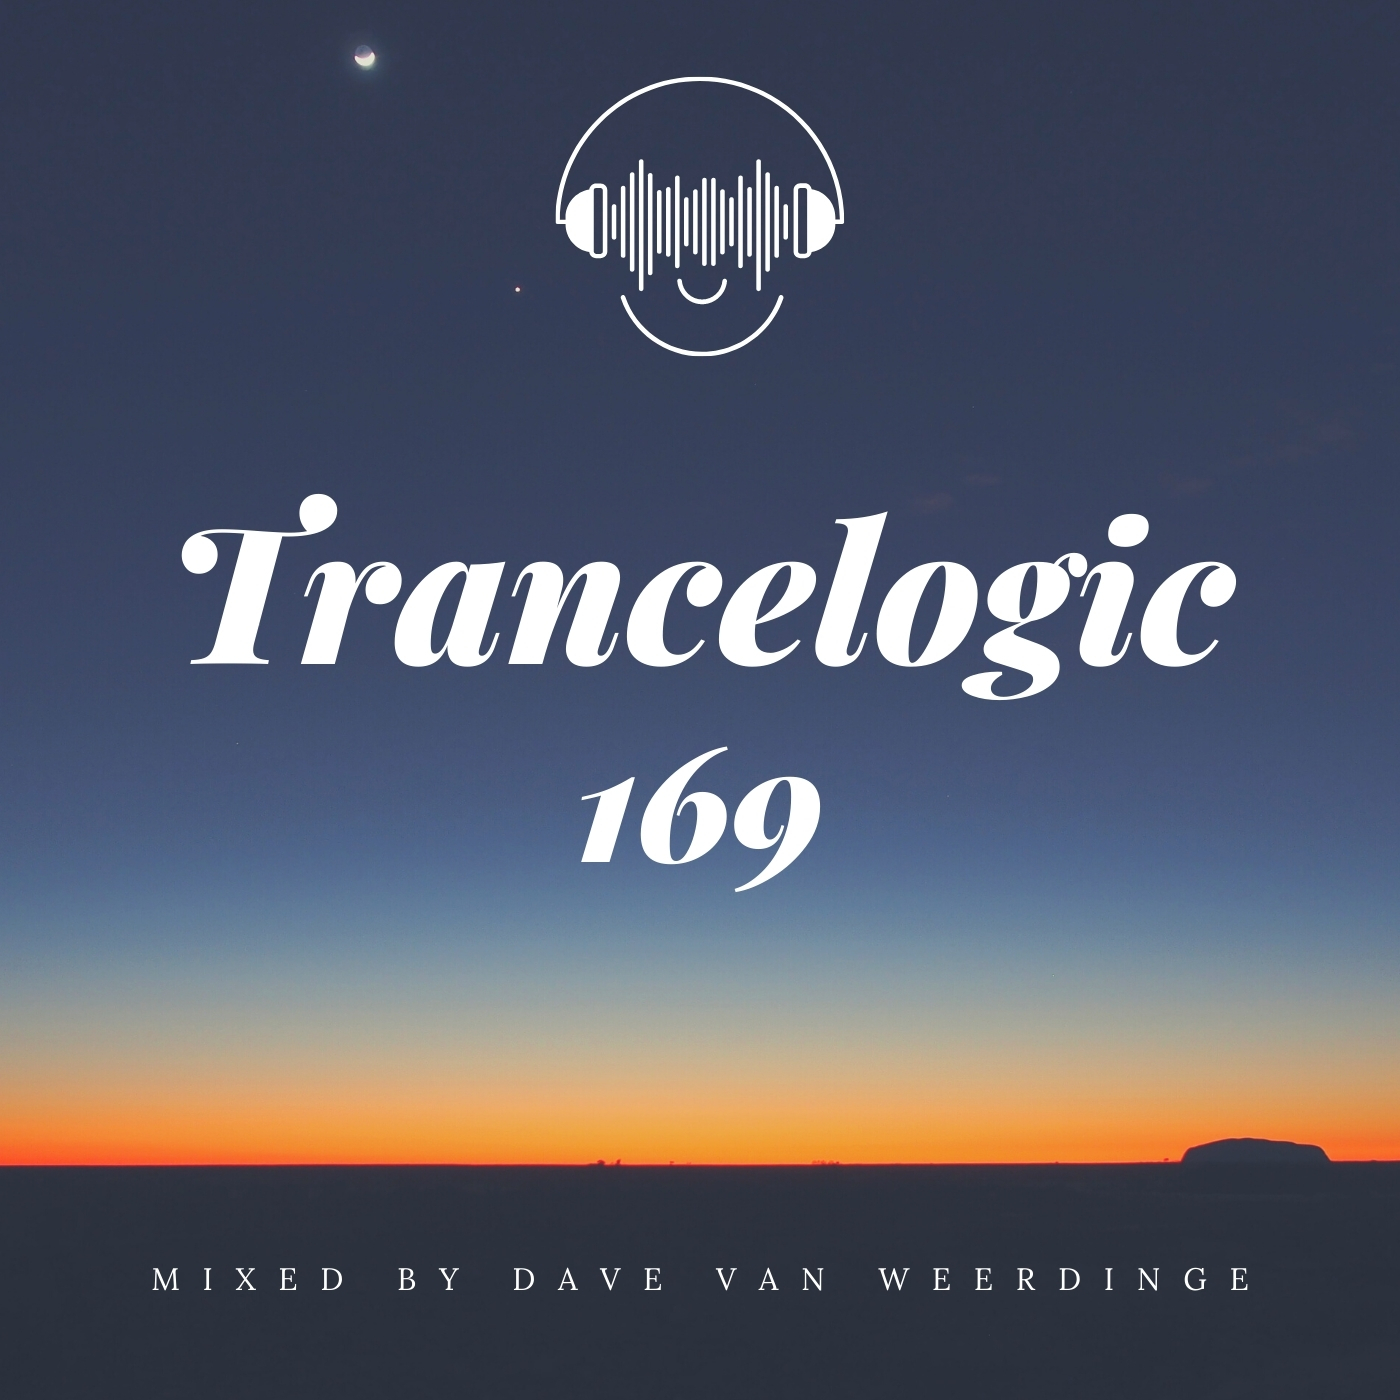 Trancelogic 169 by Dave van Weerdinge